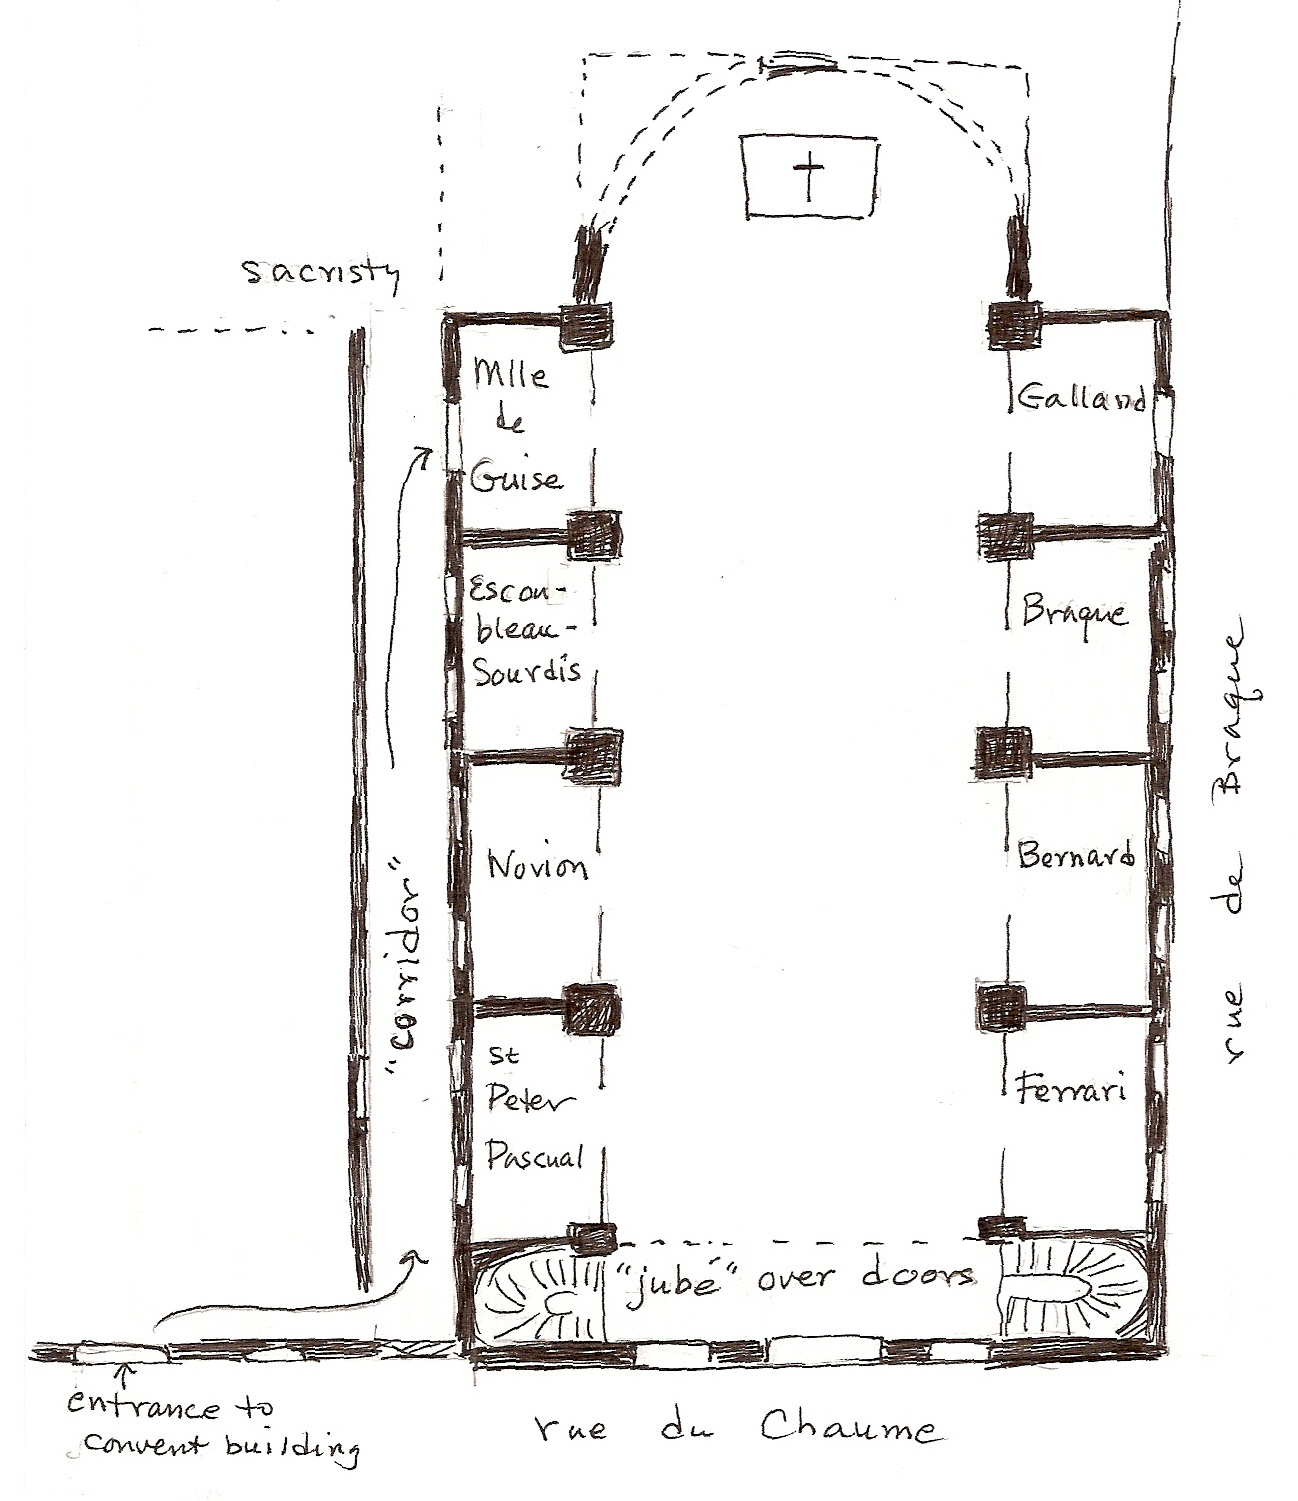 My reconstruction of the Mercy, floor plan